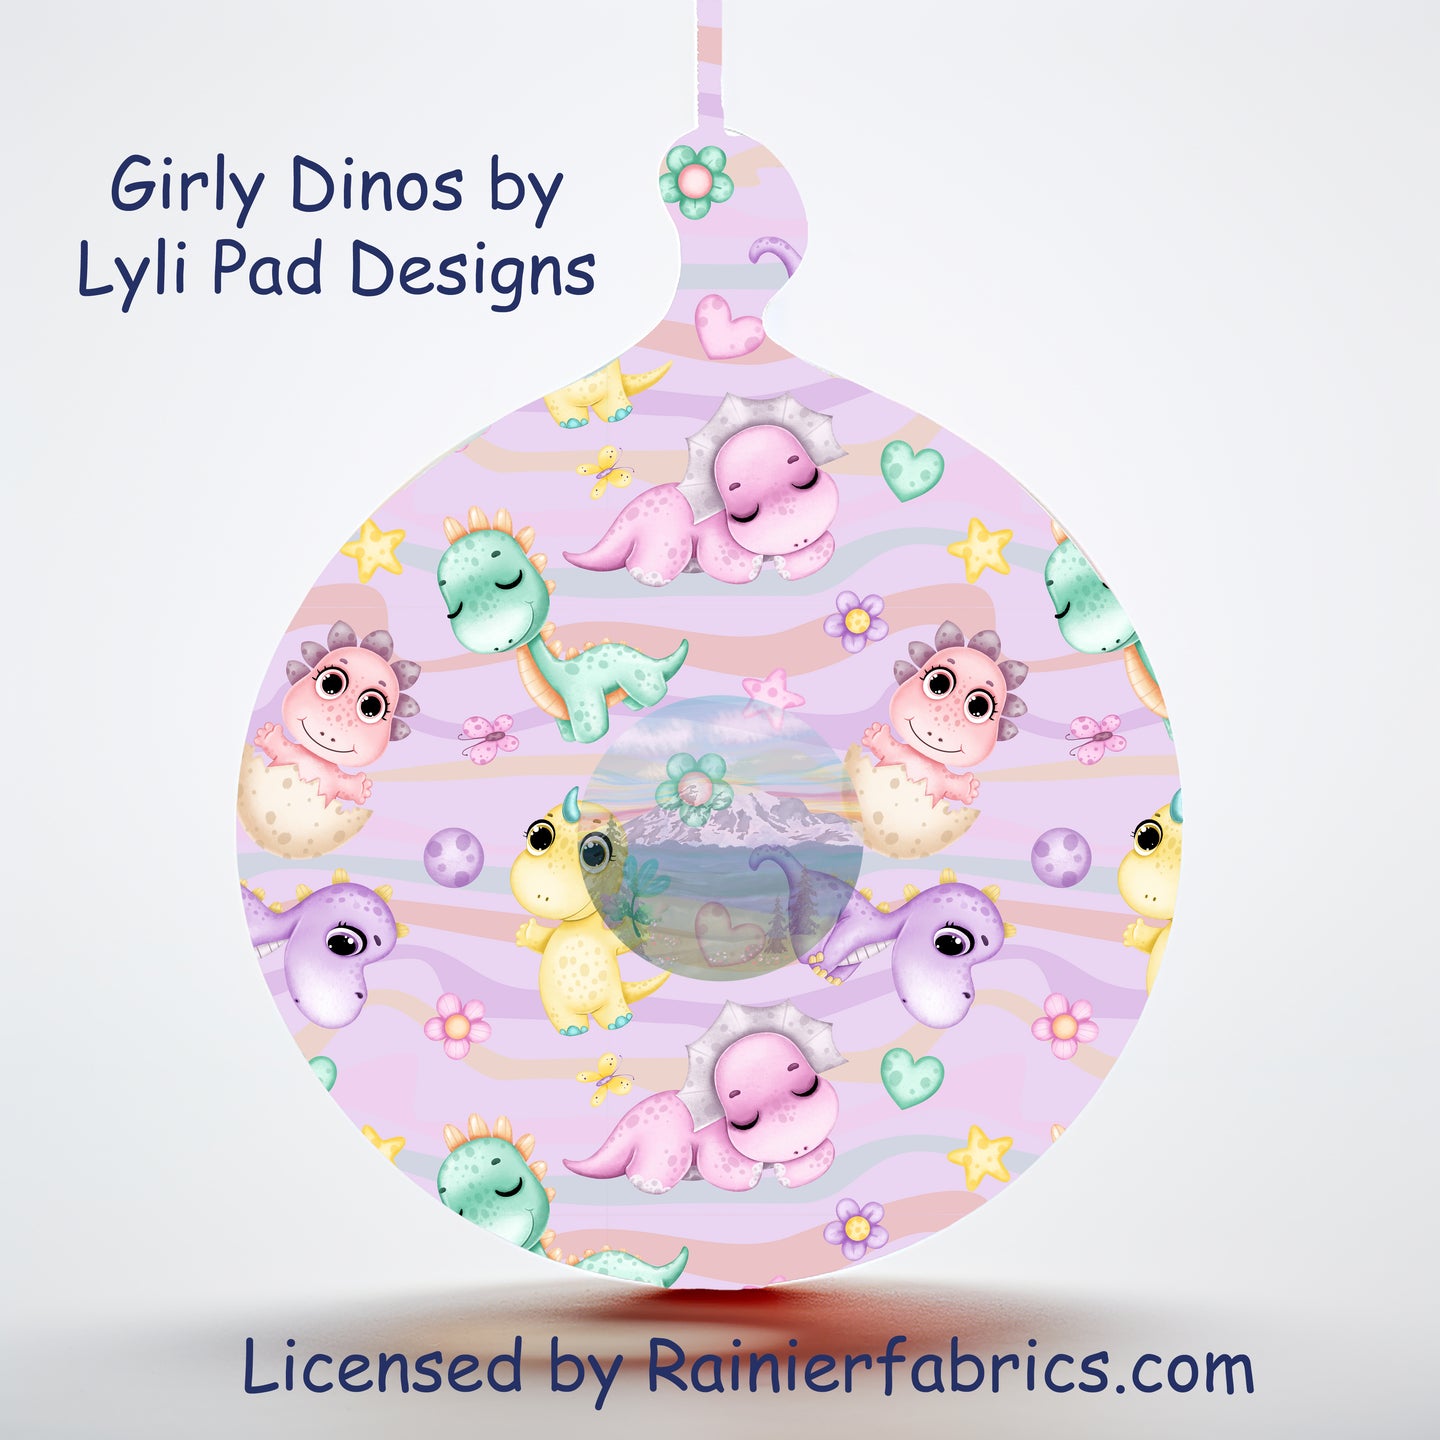 Girly Dinos by LyliPad Designs